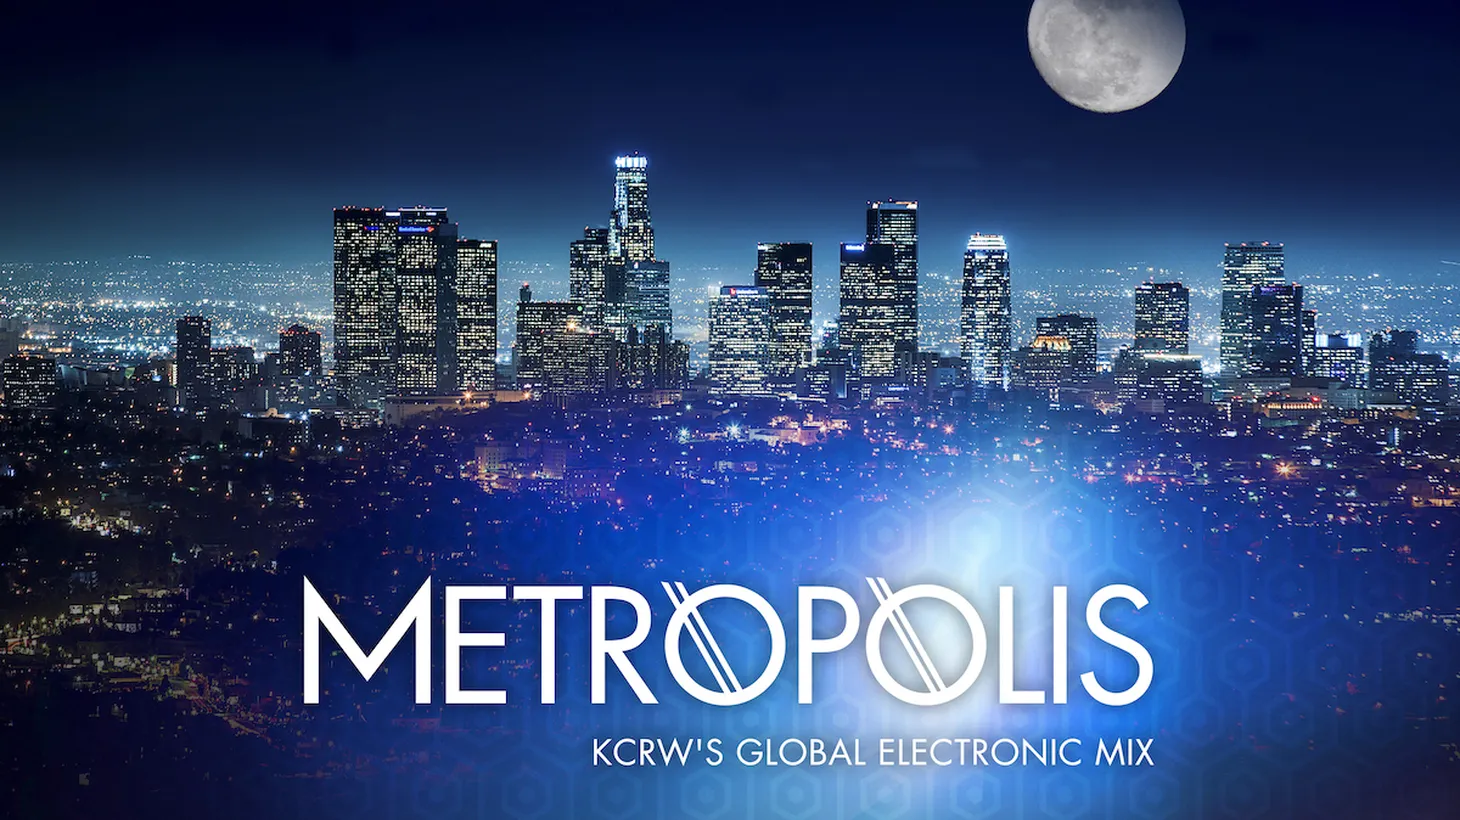 Metropolis playlist, January 1, 2022.